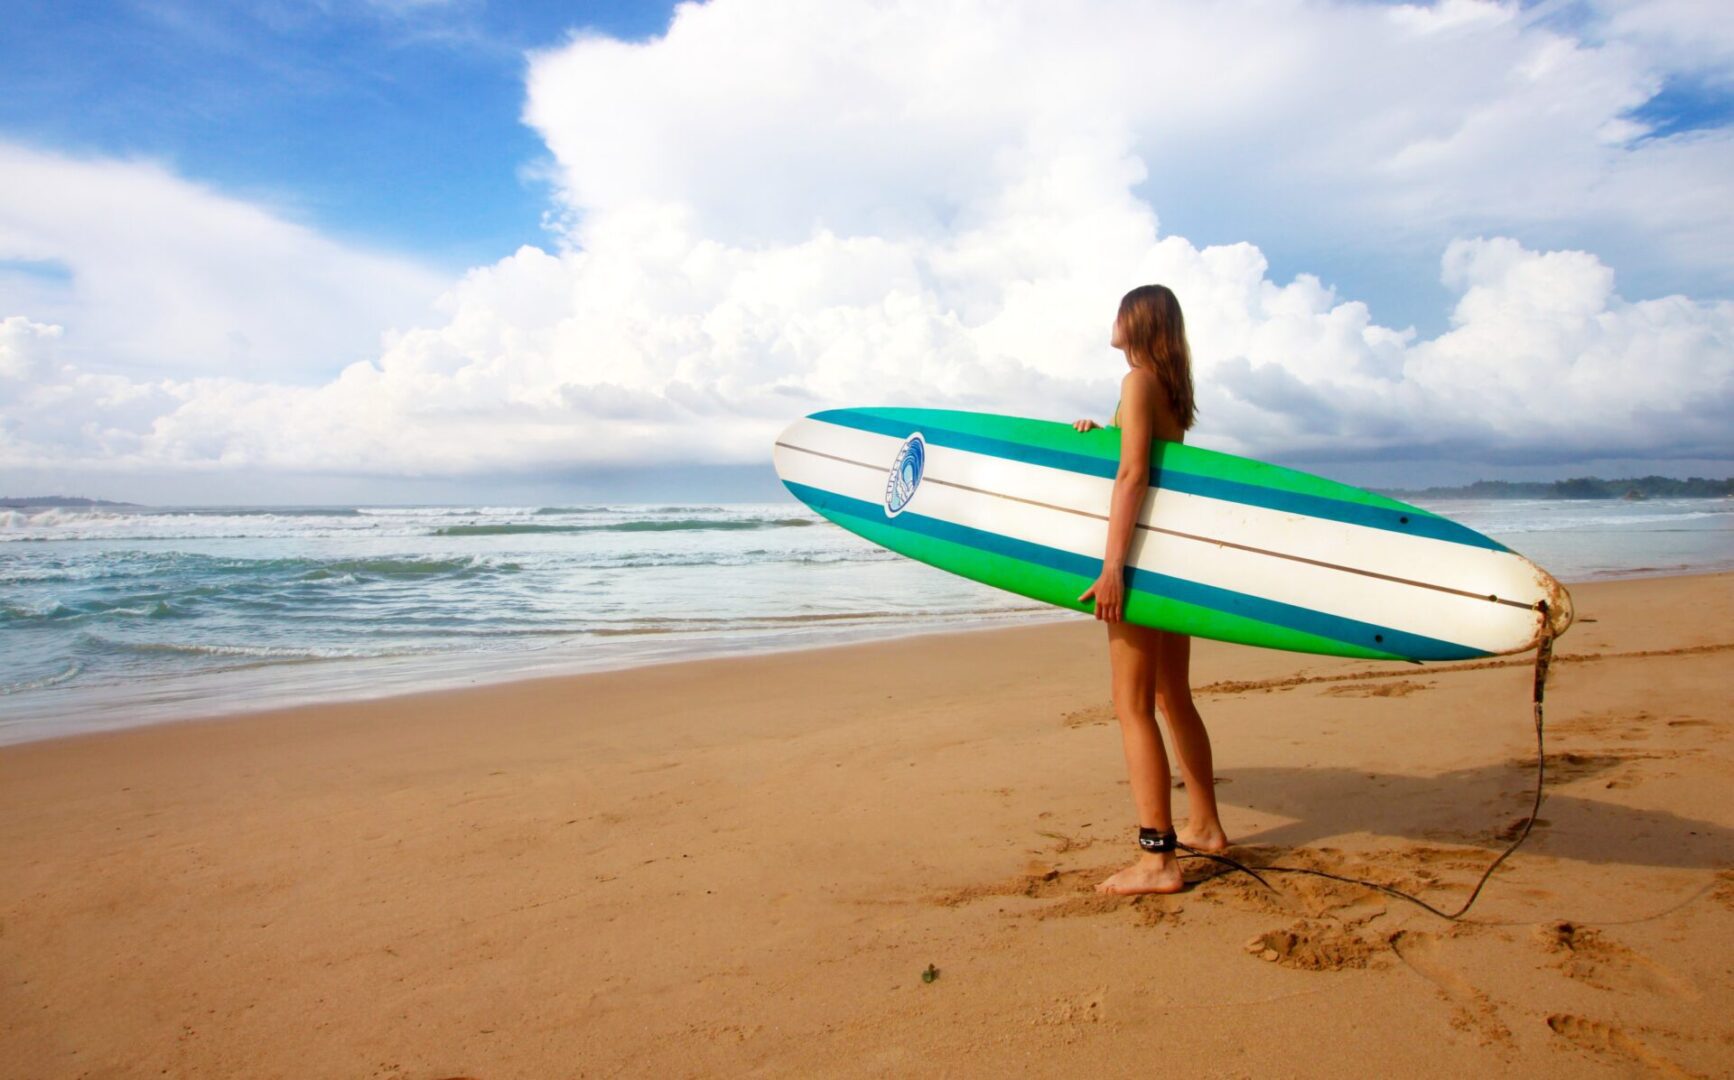 Surfing in Sri Lanka in beach holidays